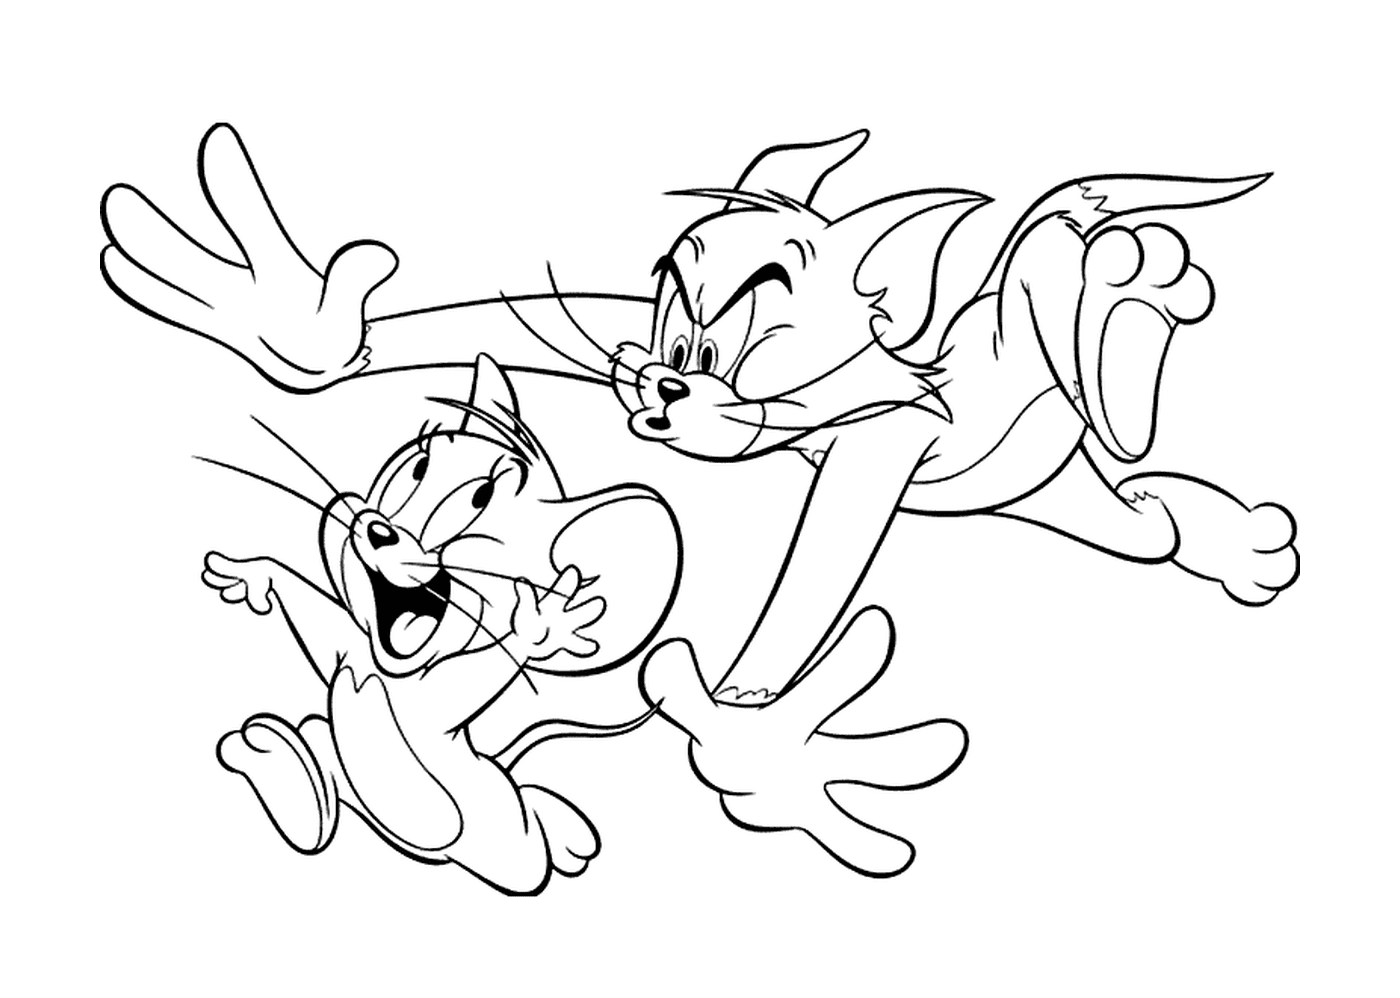  Tom corre dietro a Jerry 